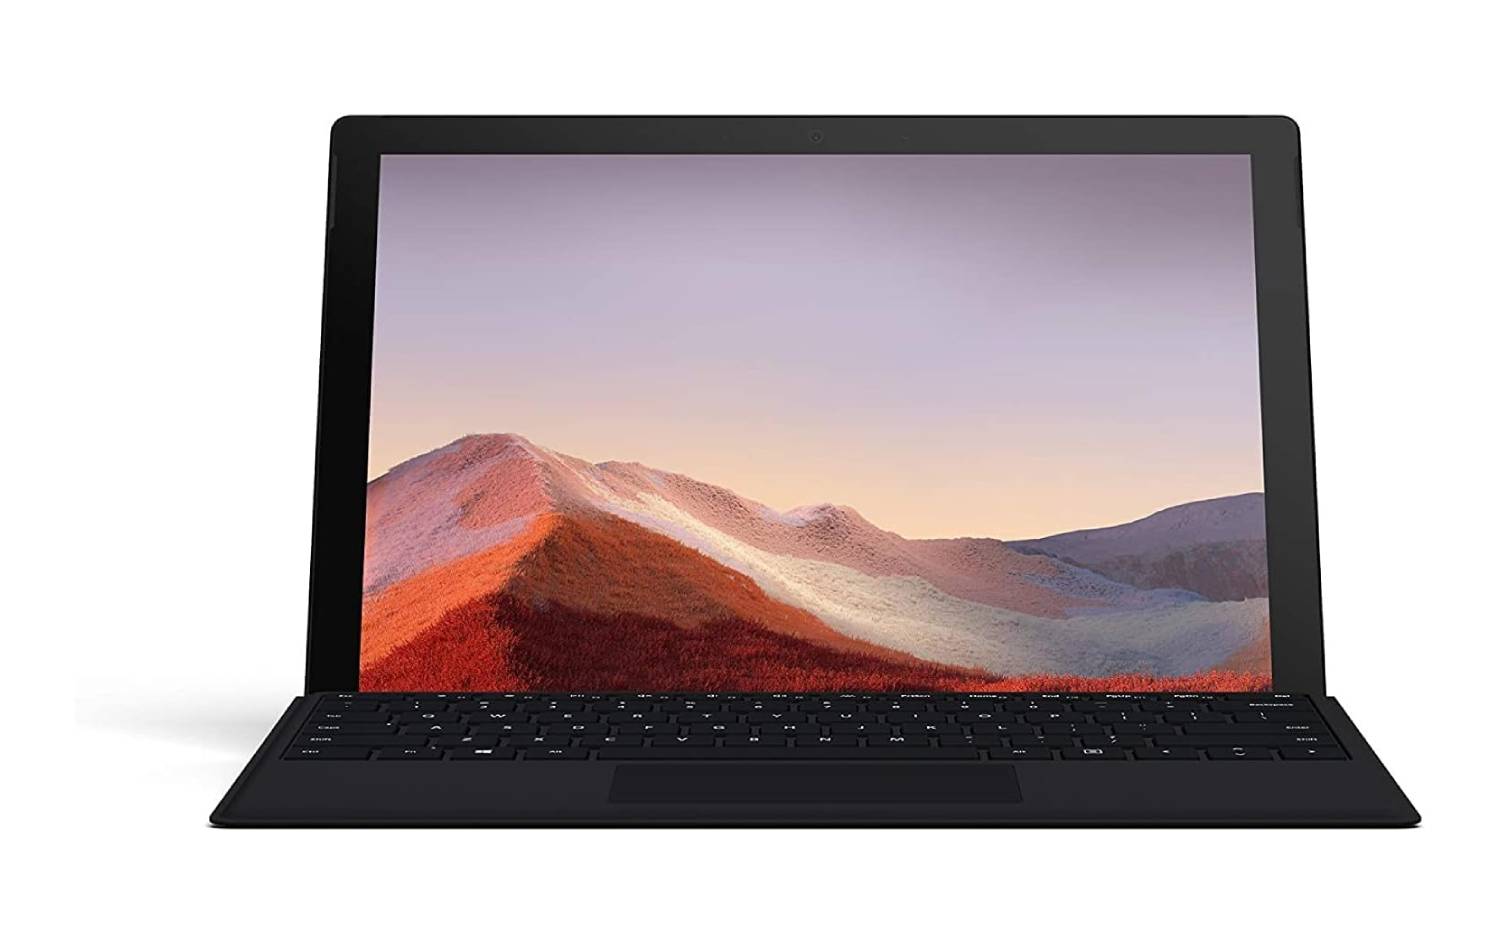 Microsoft Corporation Surface Pro 4 Intel Core i5 6th Gen 4GB RAM 128GB SSD Microsoft Windows 10 Pro Touchscreen